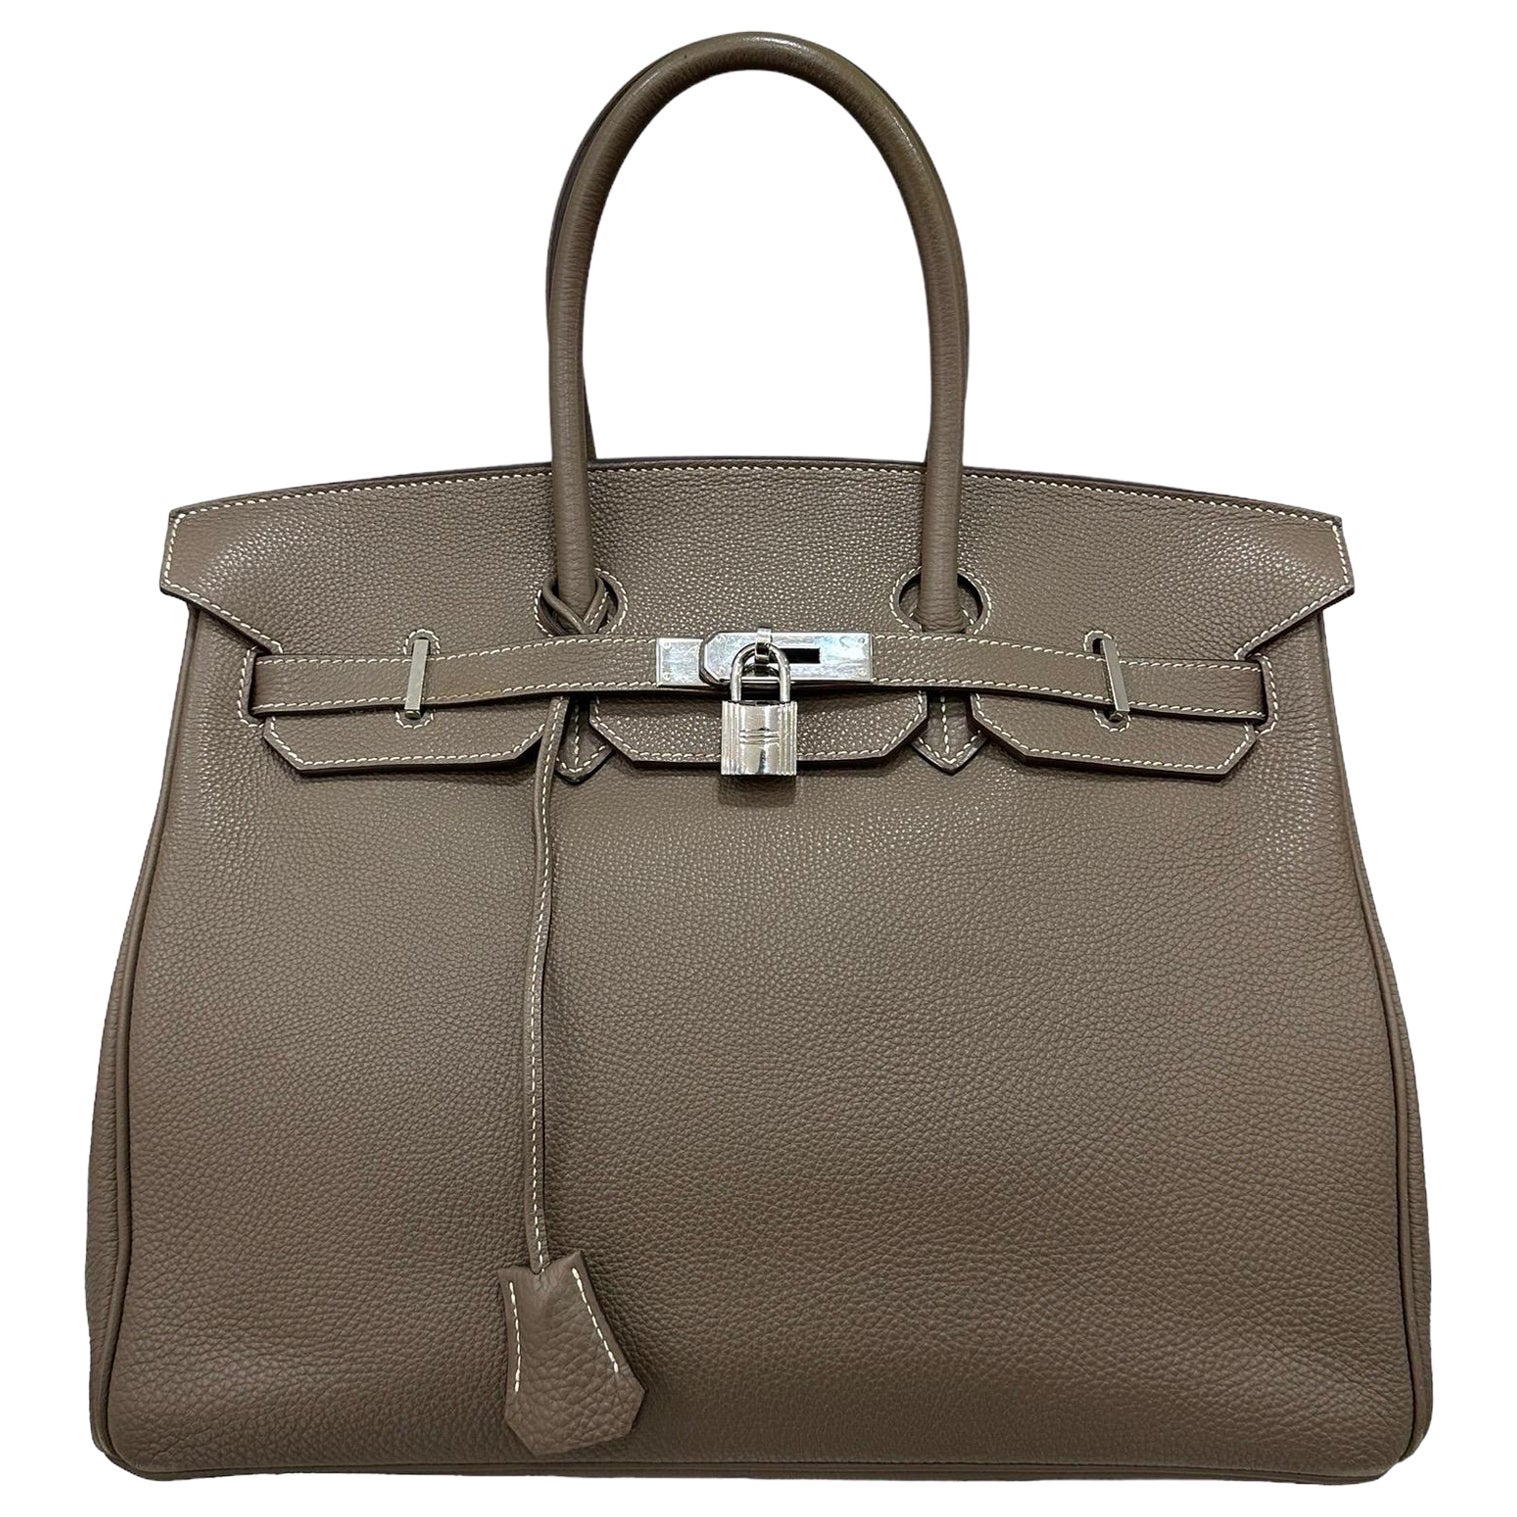 2008 Hermès Birkin 35 Togo Leather Toundra Top Handle Bag en vente